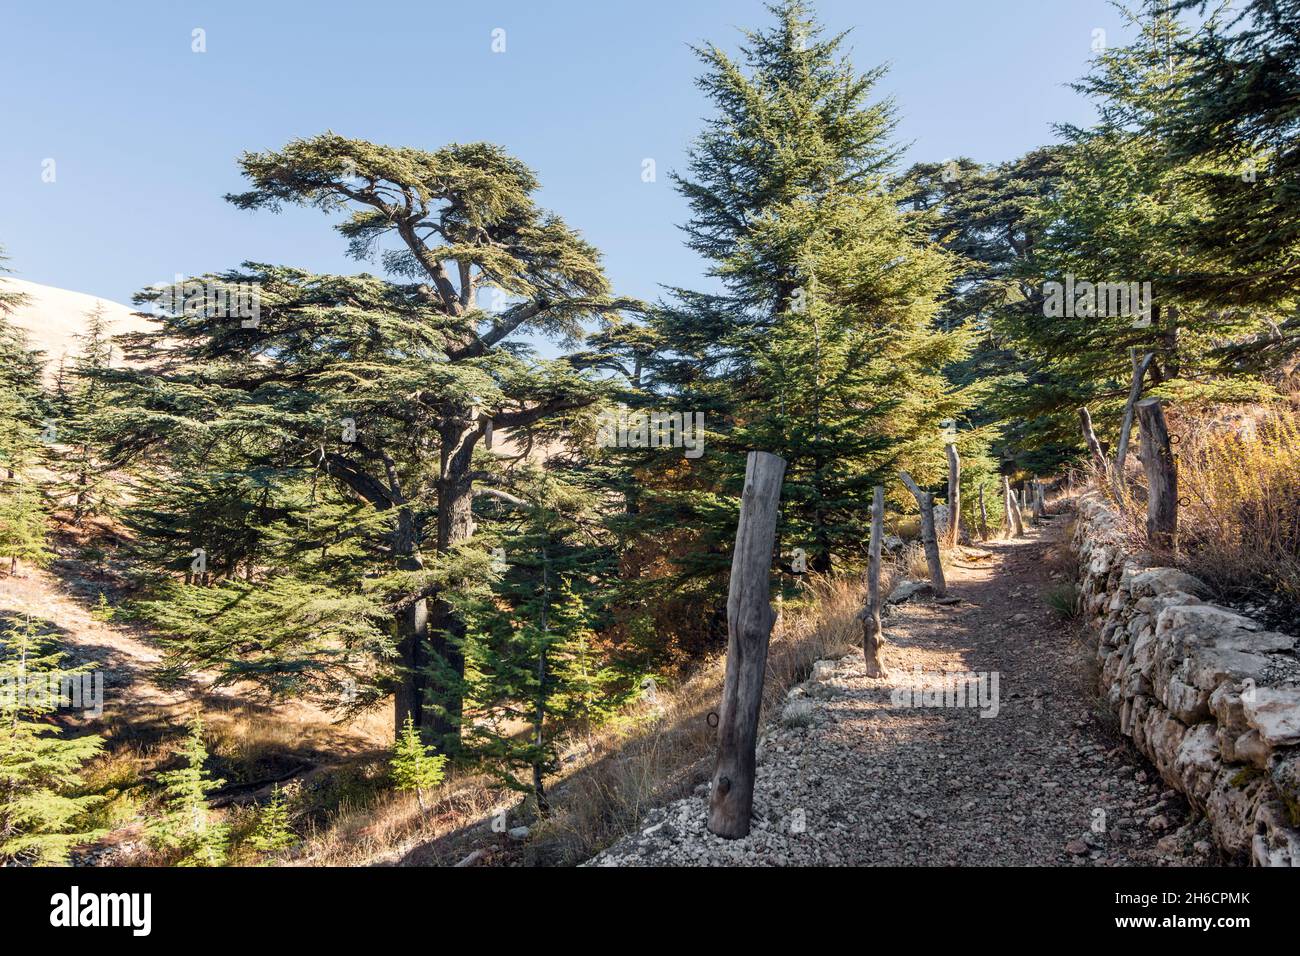 Arbre de Cedrus libani dans la forêt des Cèdres de Dieu, Arz, Bsharri, Liban Banque D'Images